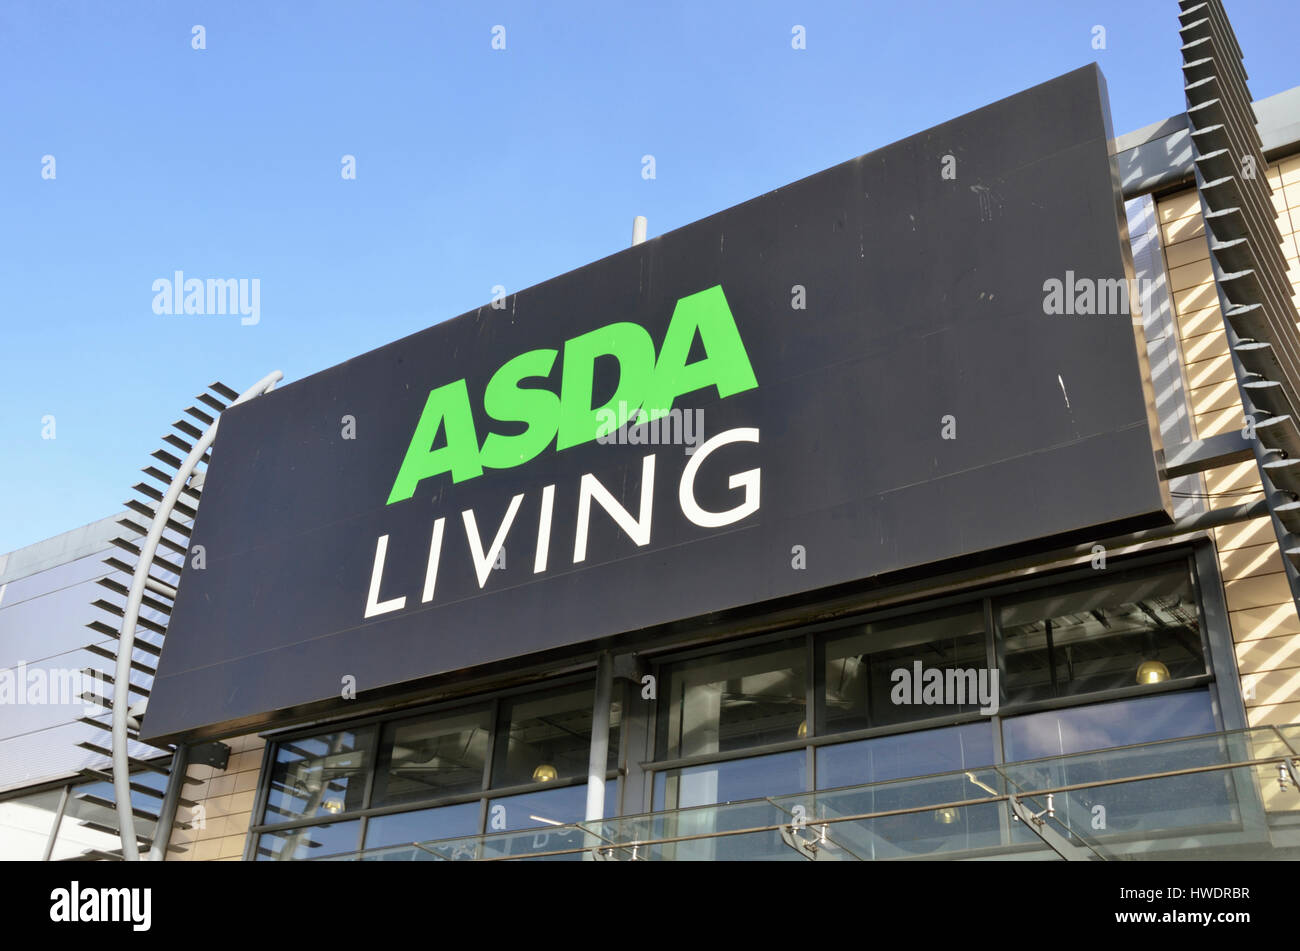 Asda Living superstore in Tottenham Hale Retail Park, London, UK. Stock Photo